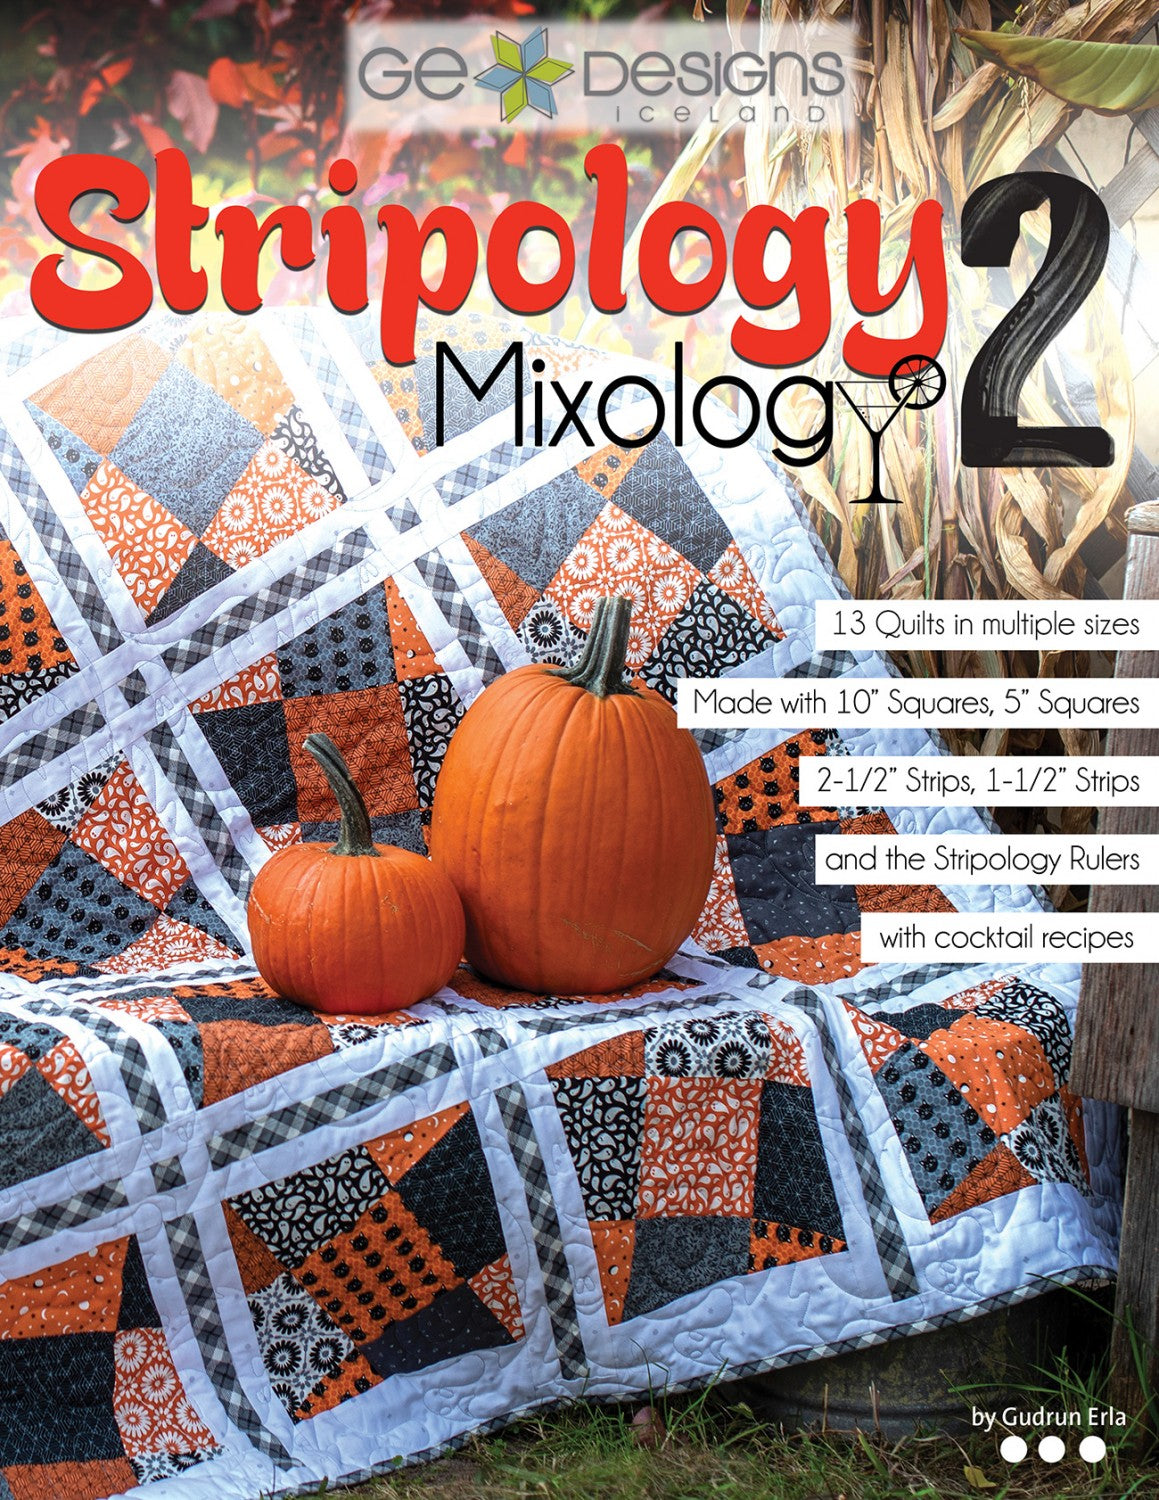 Stripology Mixology 2 Quilt Pattern Book by Gudrun Erla of G.E. Designs